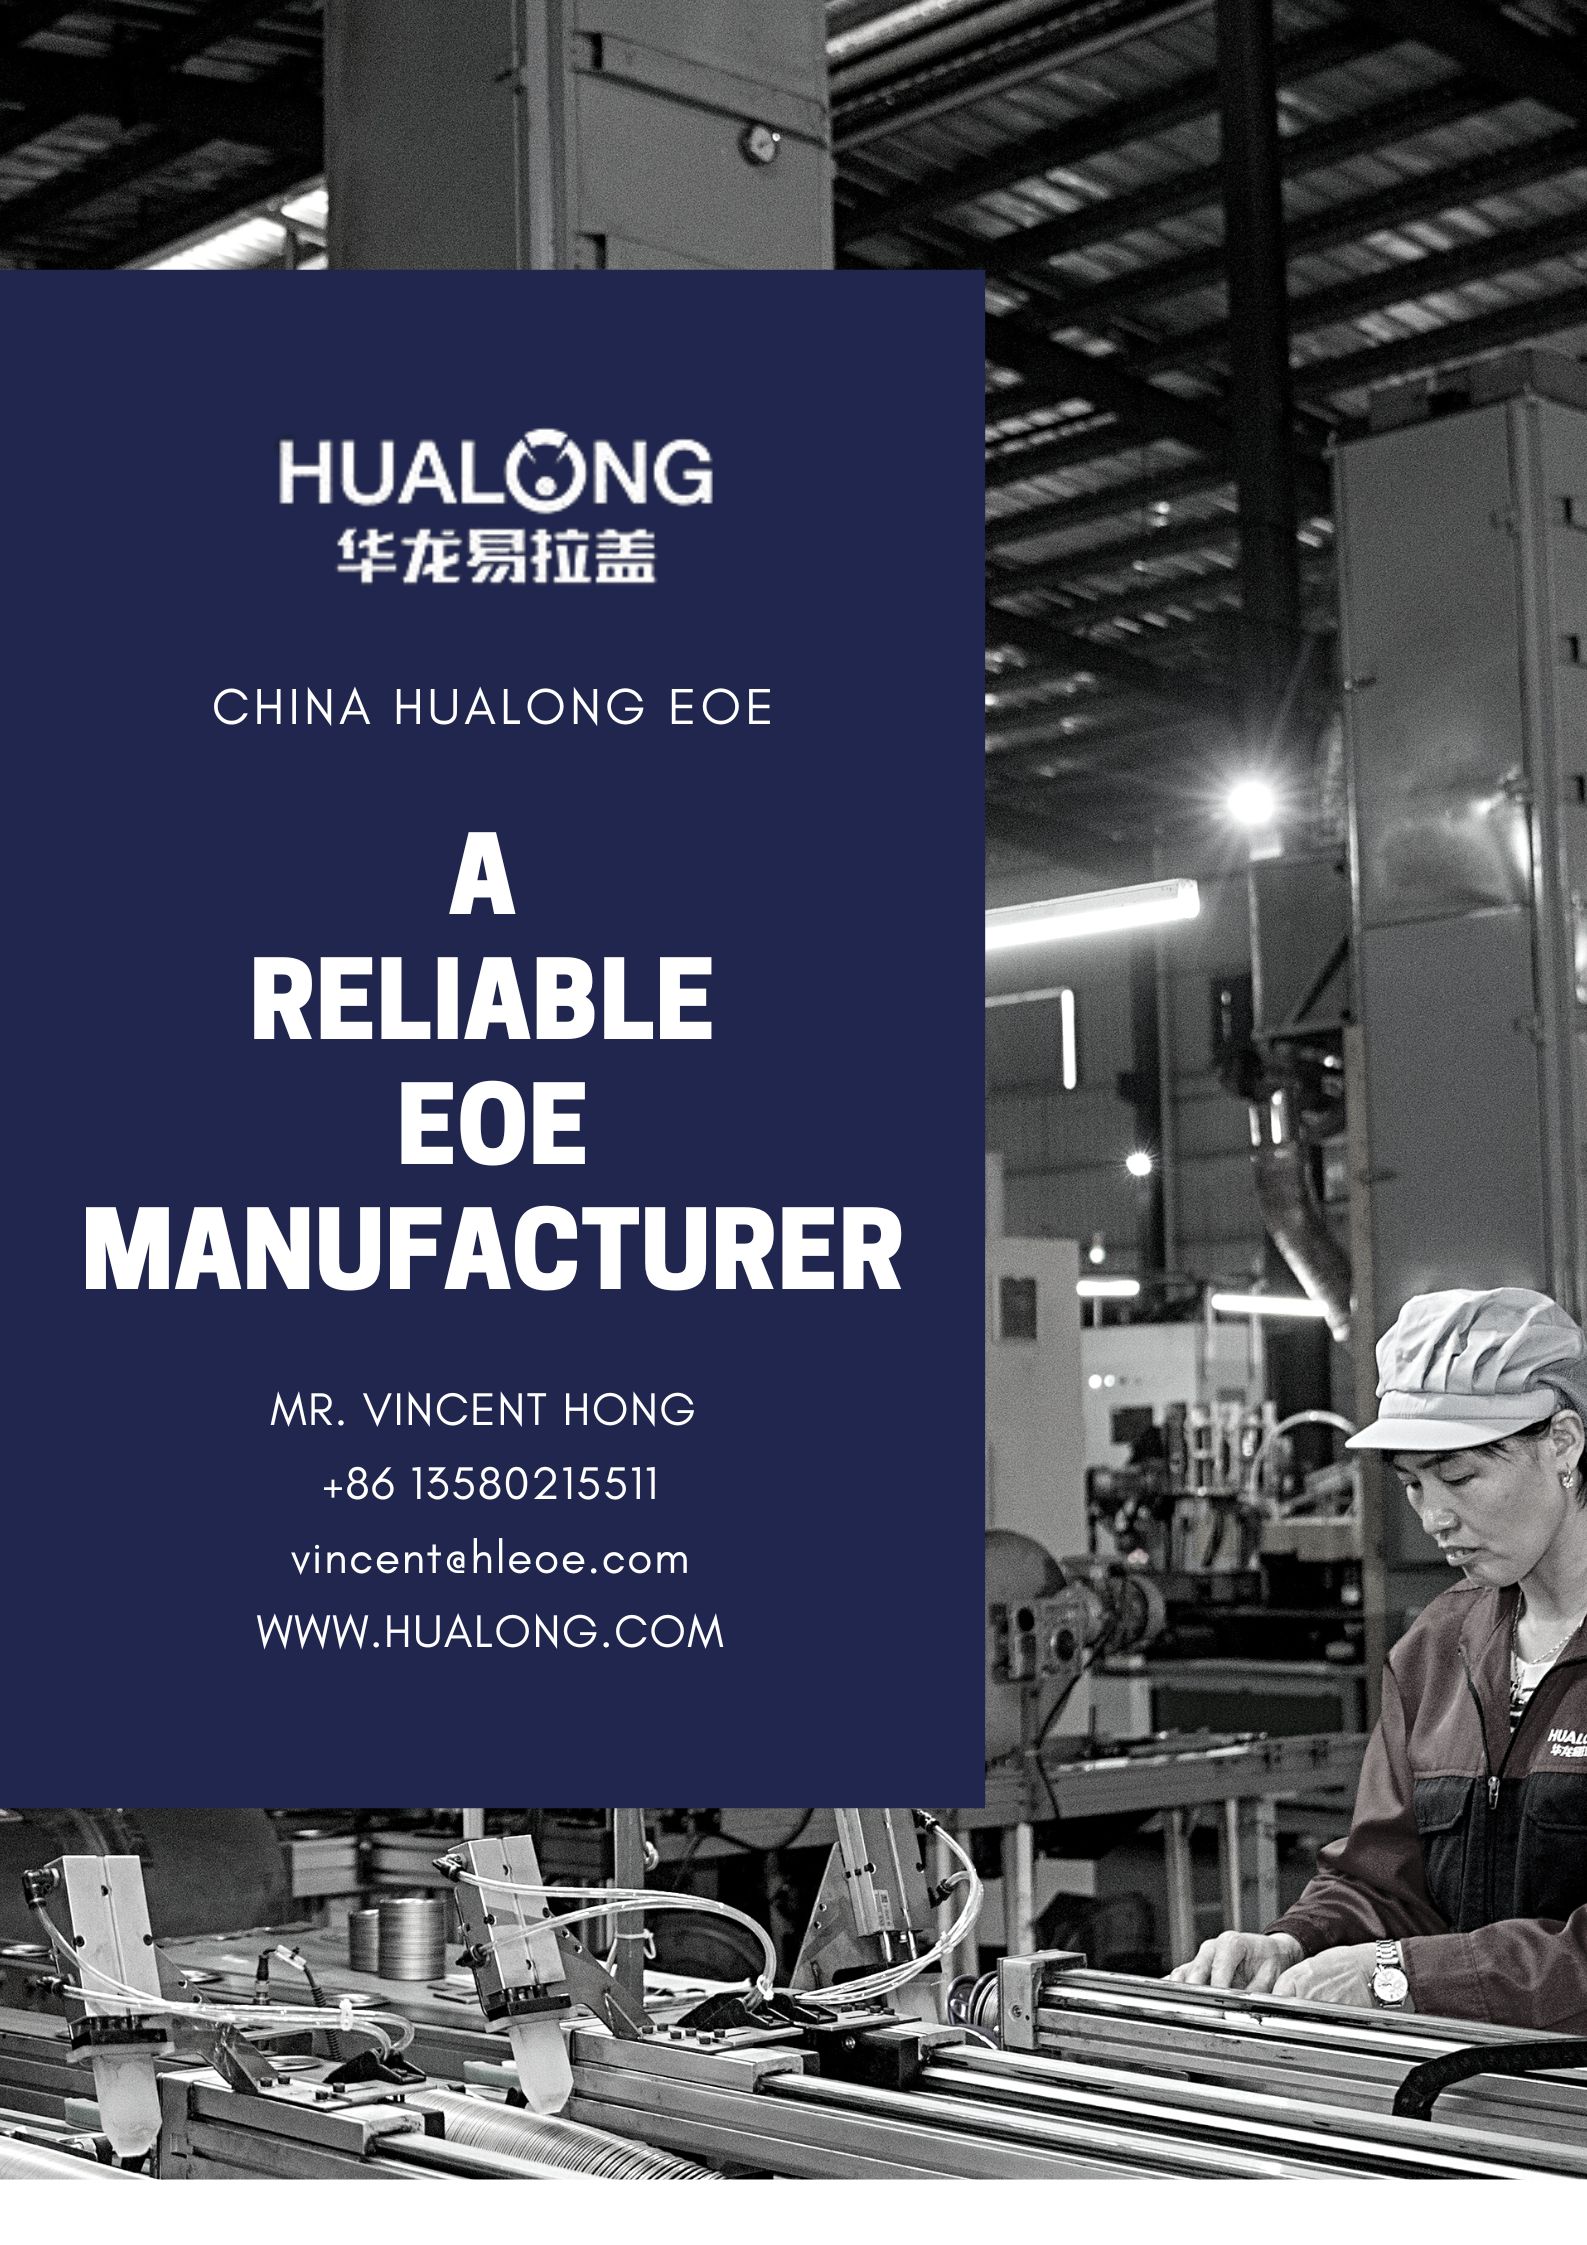 Odaberite Hualong EOE za pouzdano partnerstvo u opskrbi.